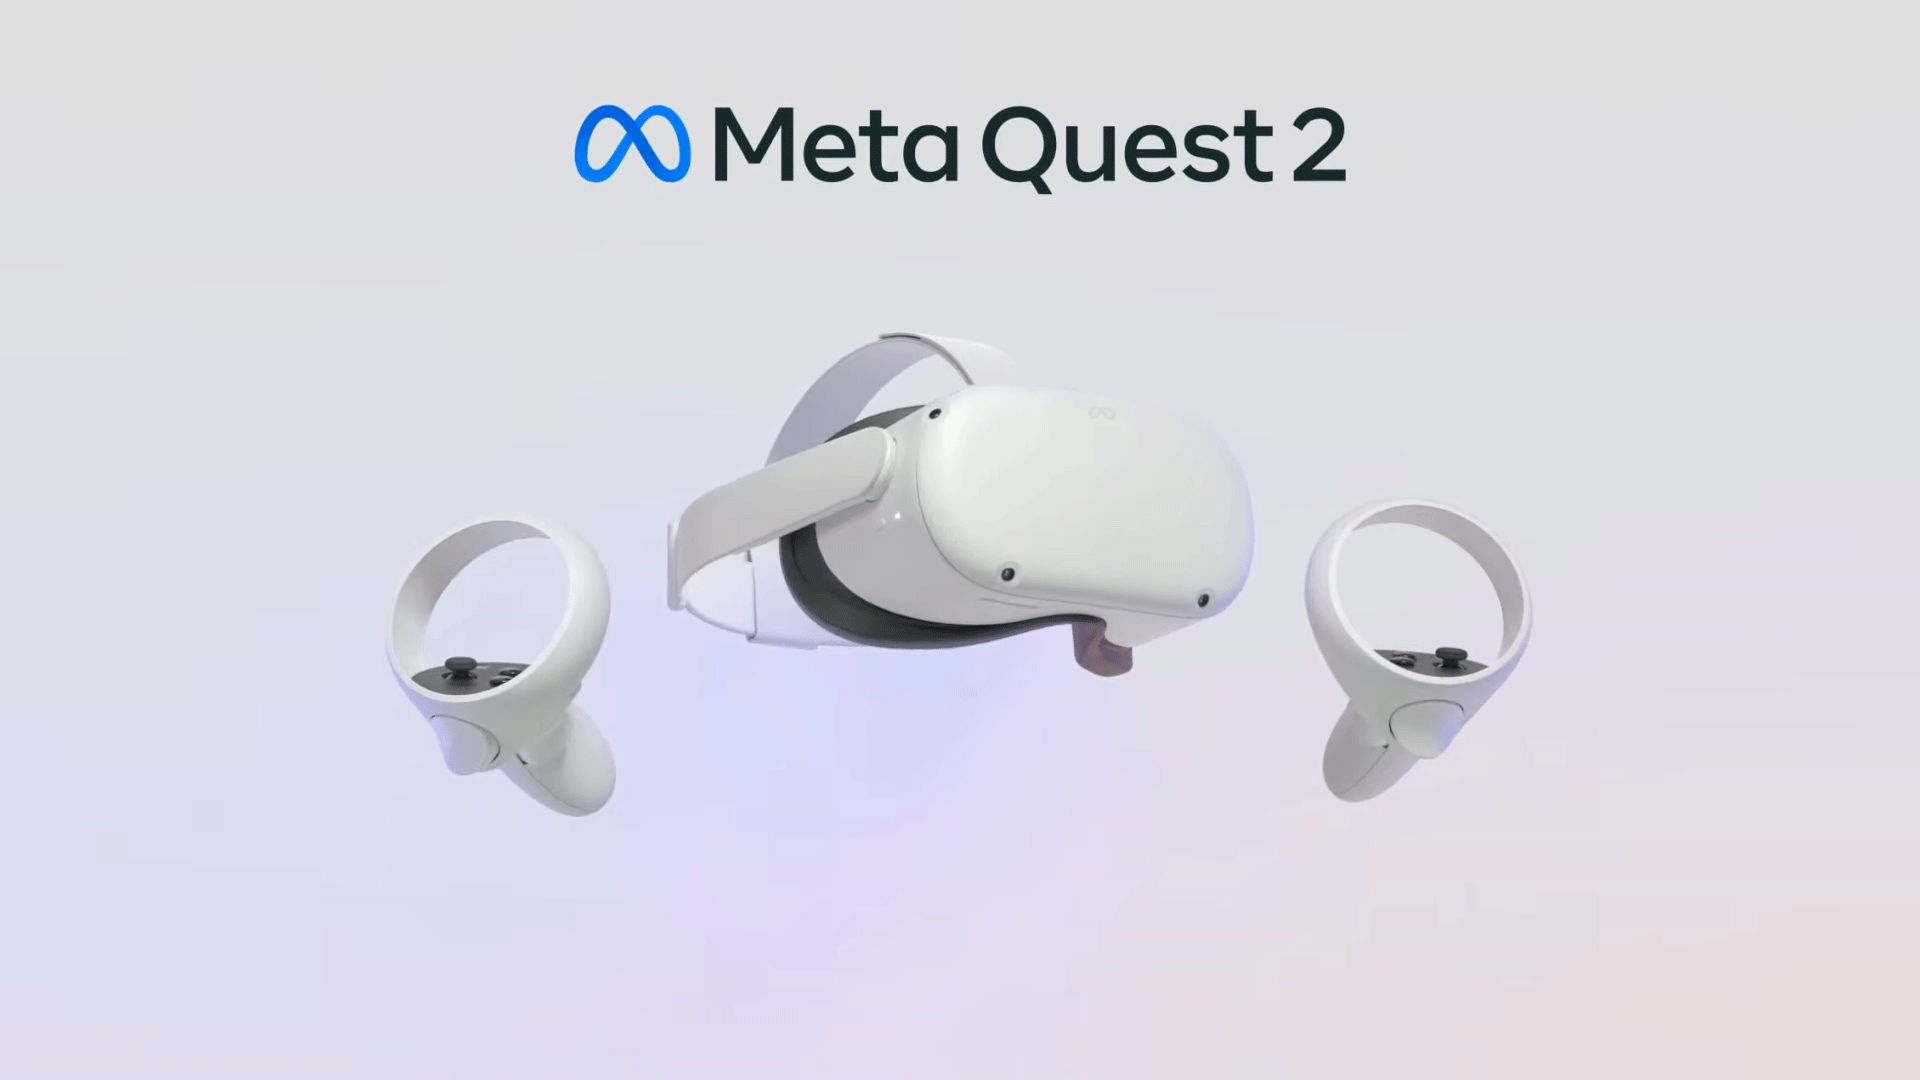 Meta Quest 2 Boxes Appear on Store Shelves, Rebranding Still